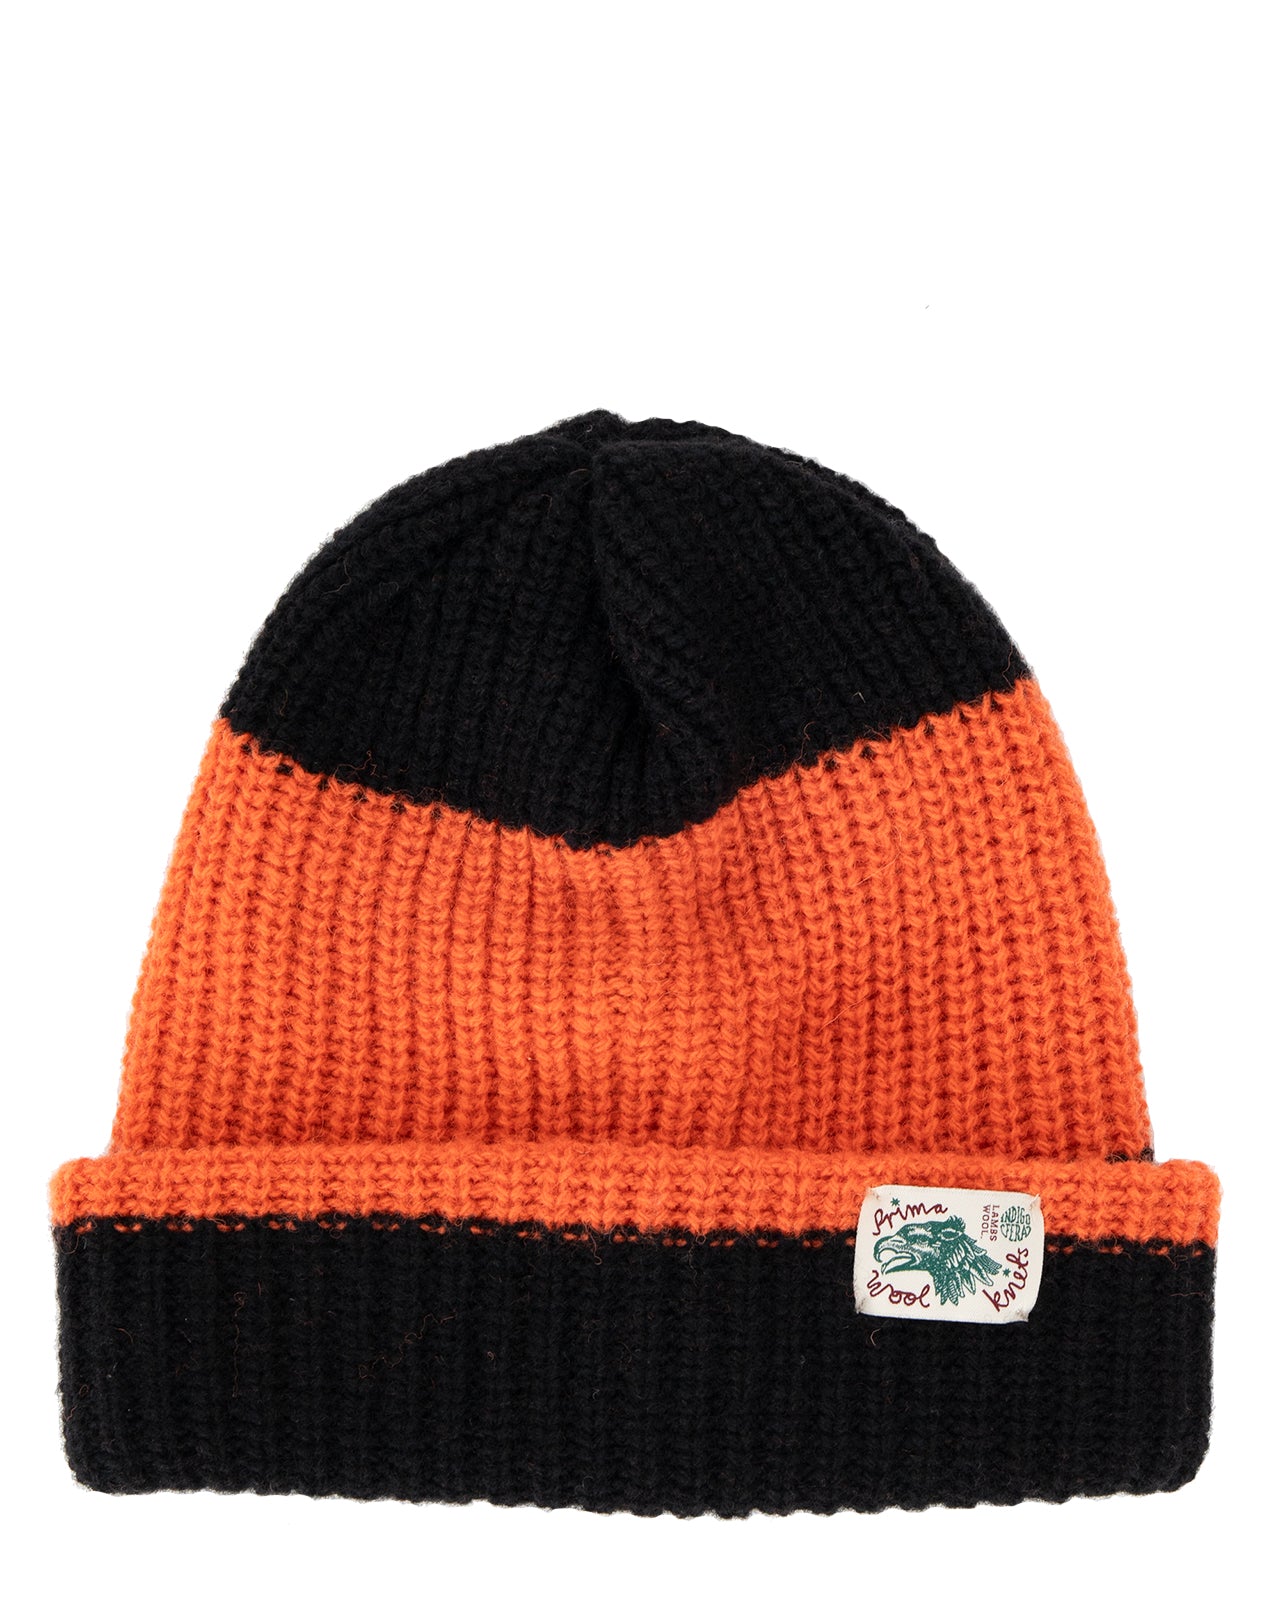 Indigofera Boone Wool Cap, Orange / Black